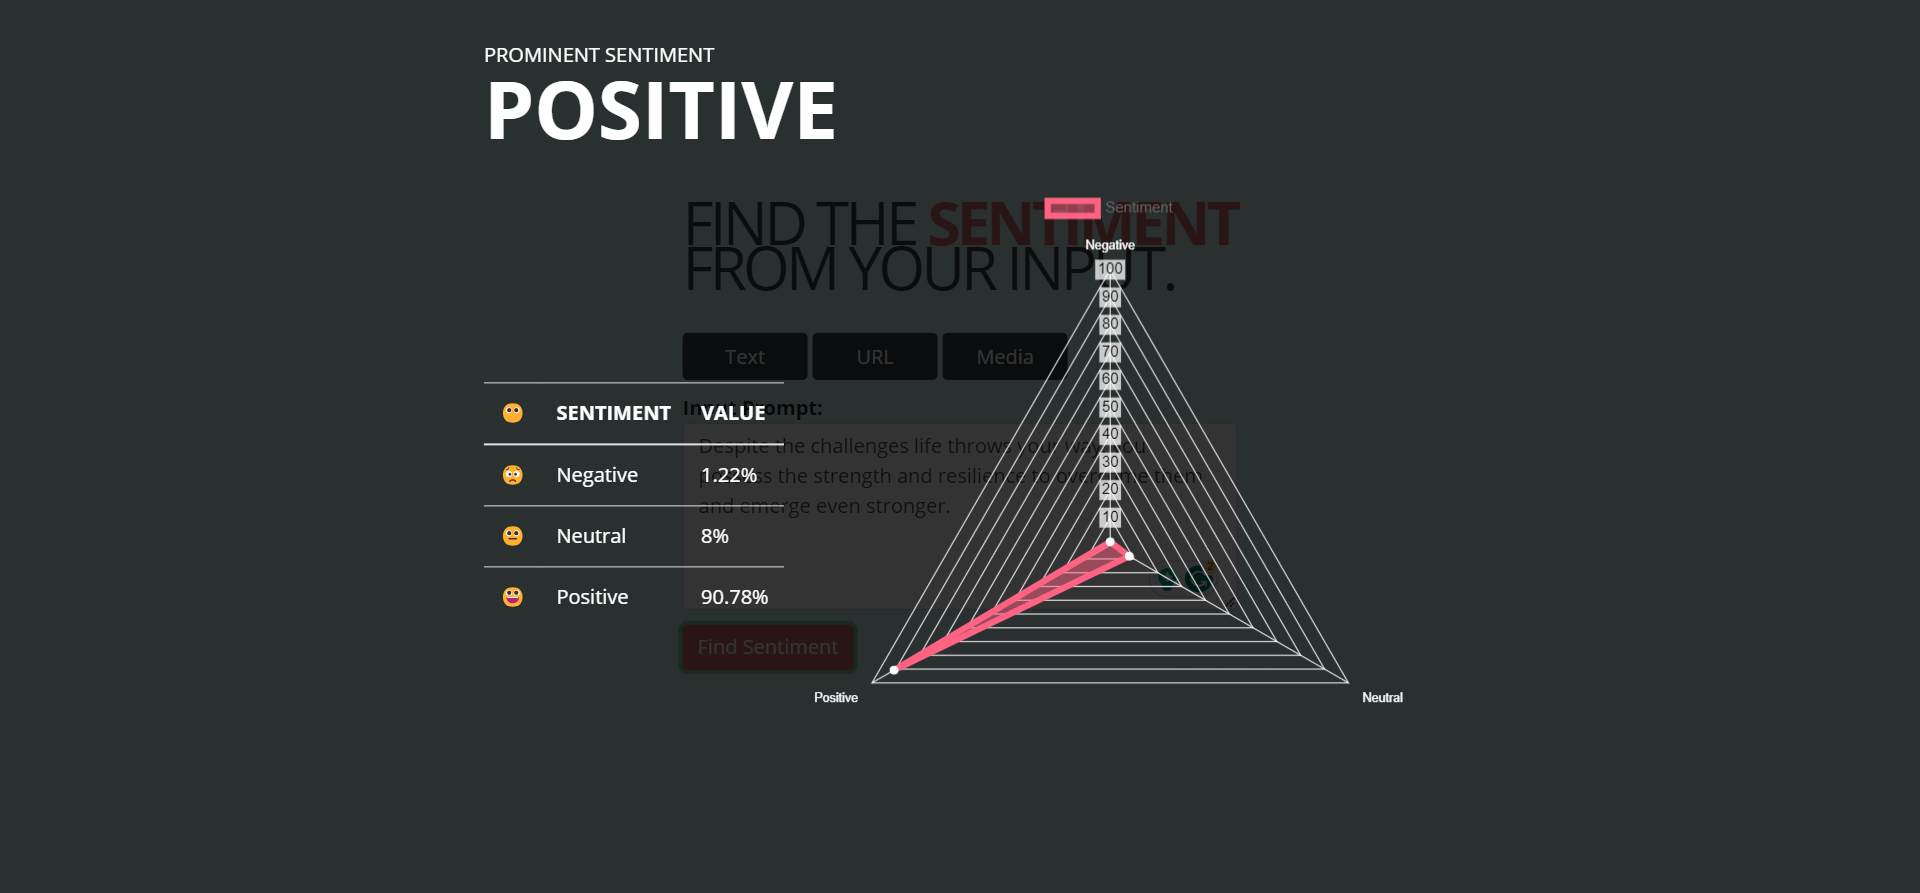 sentiment analysis for positive sentence